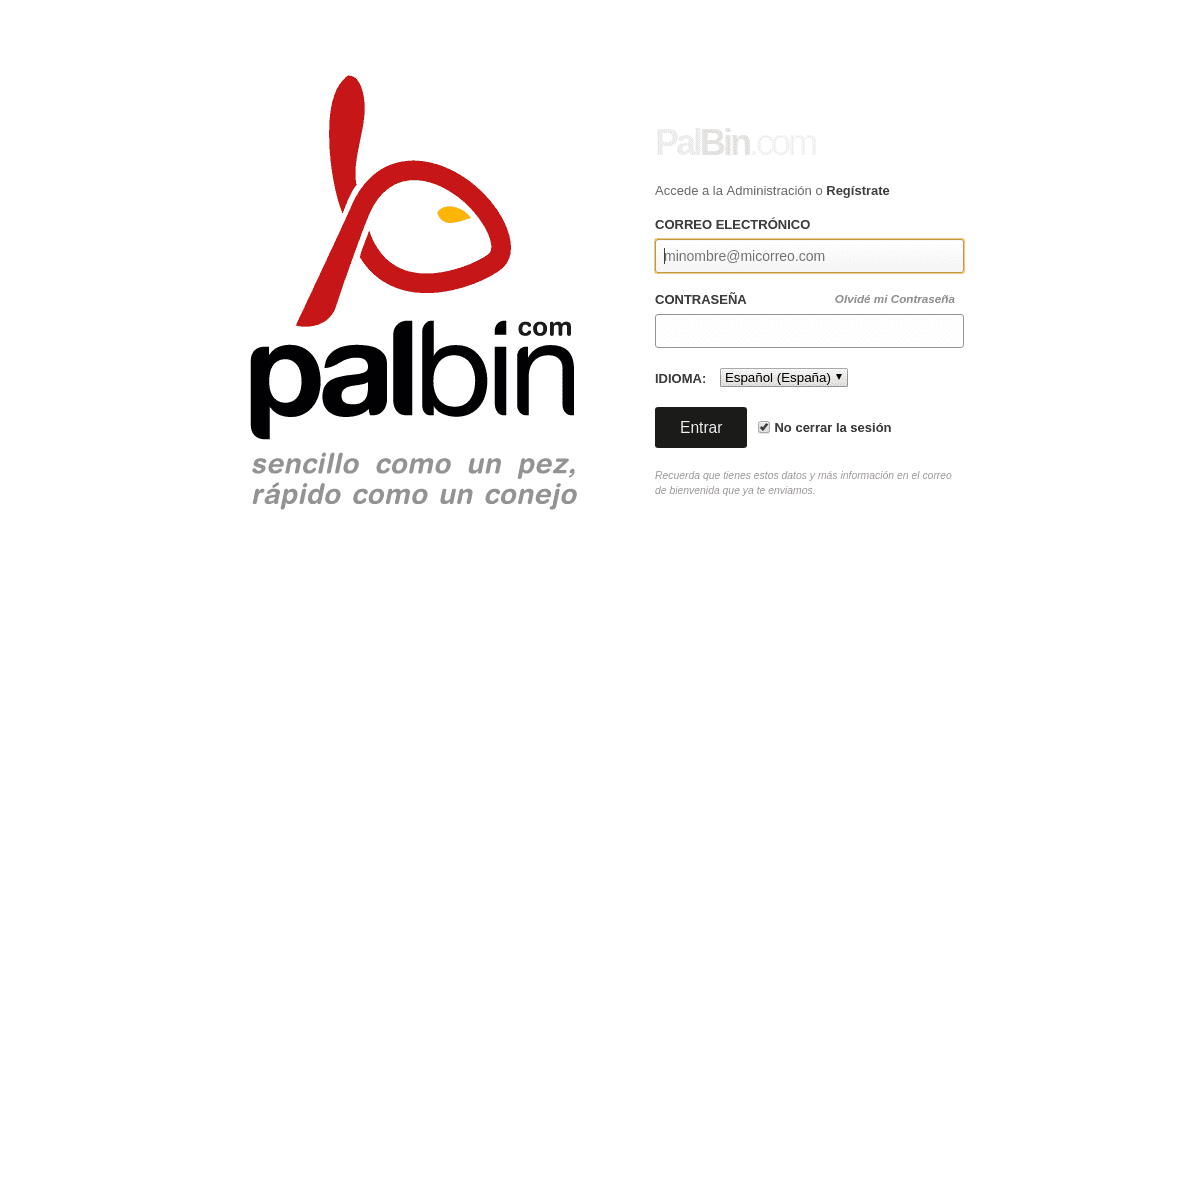 A complete backup of admin.palbin.com